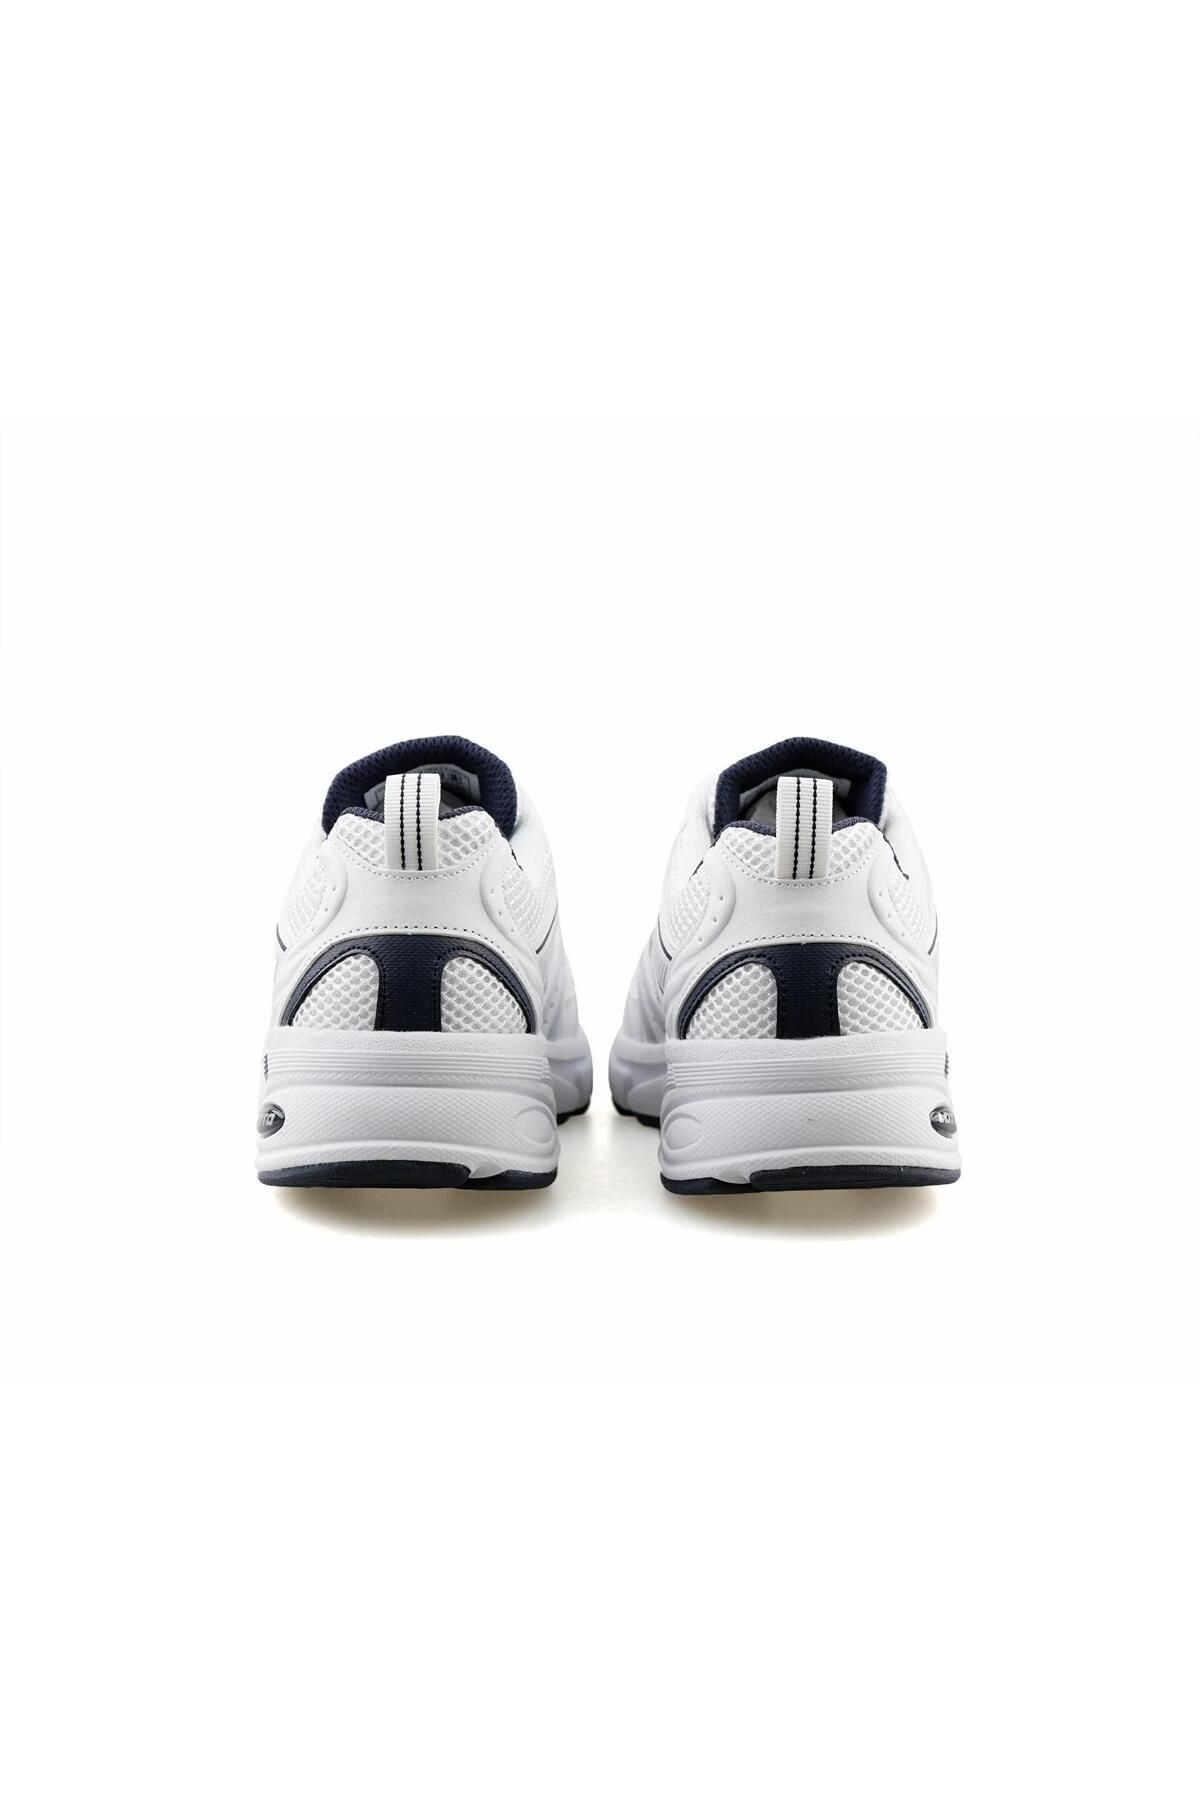 4M ATHENS 4FX Beyaz-Siyah Erkek Spor Ayakkabı